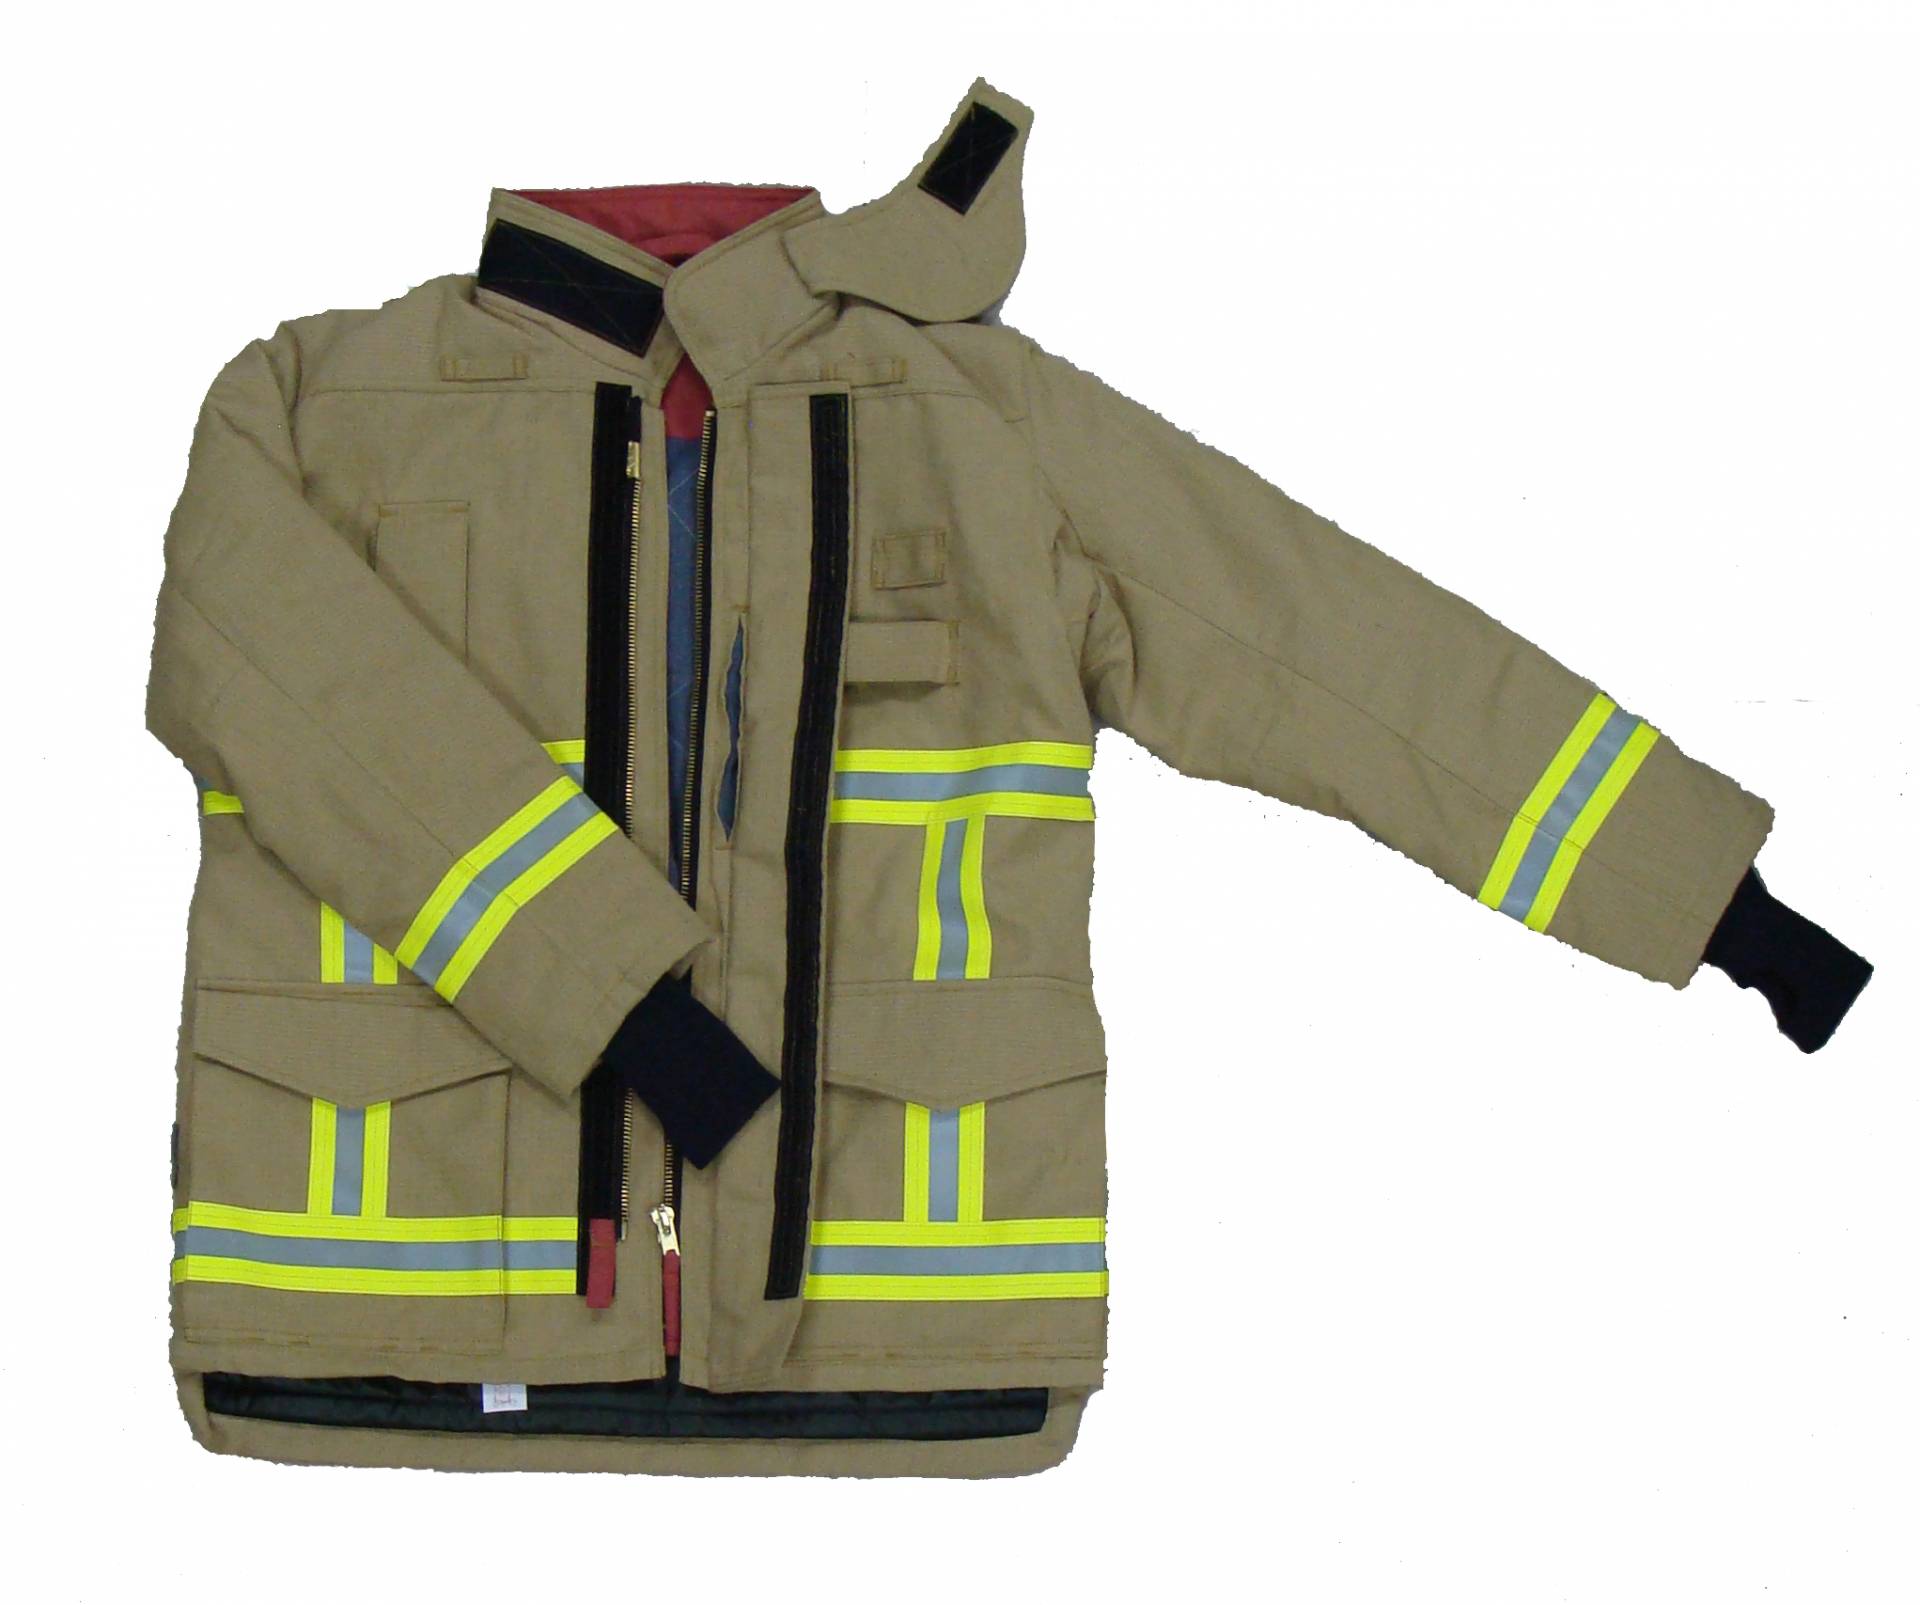 Premium 701-G European style Firefighting Suit, EN469 Level 2, CE certificate, heavy duty to protect firemen